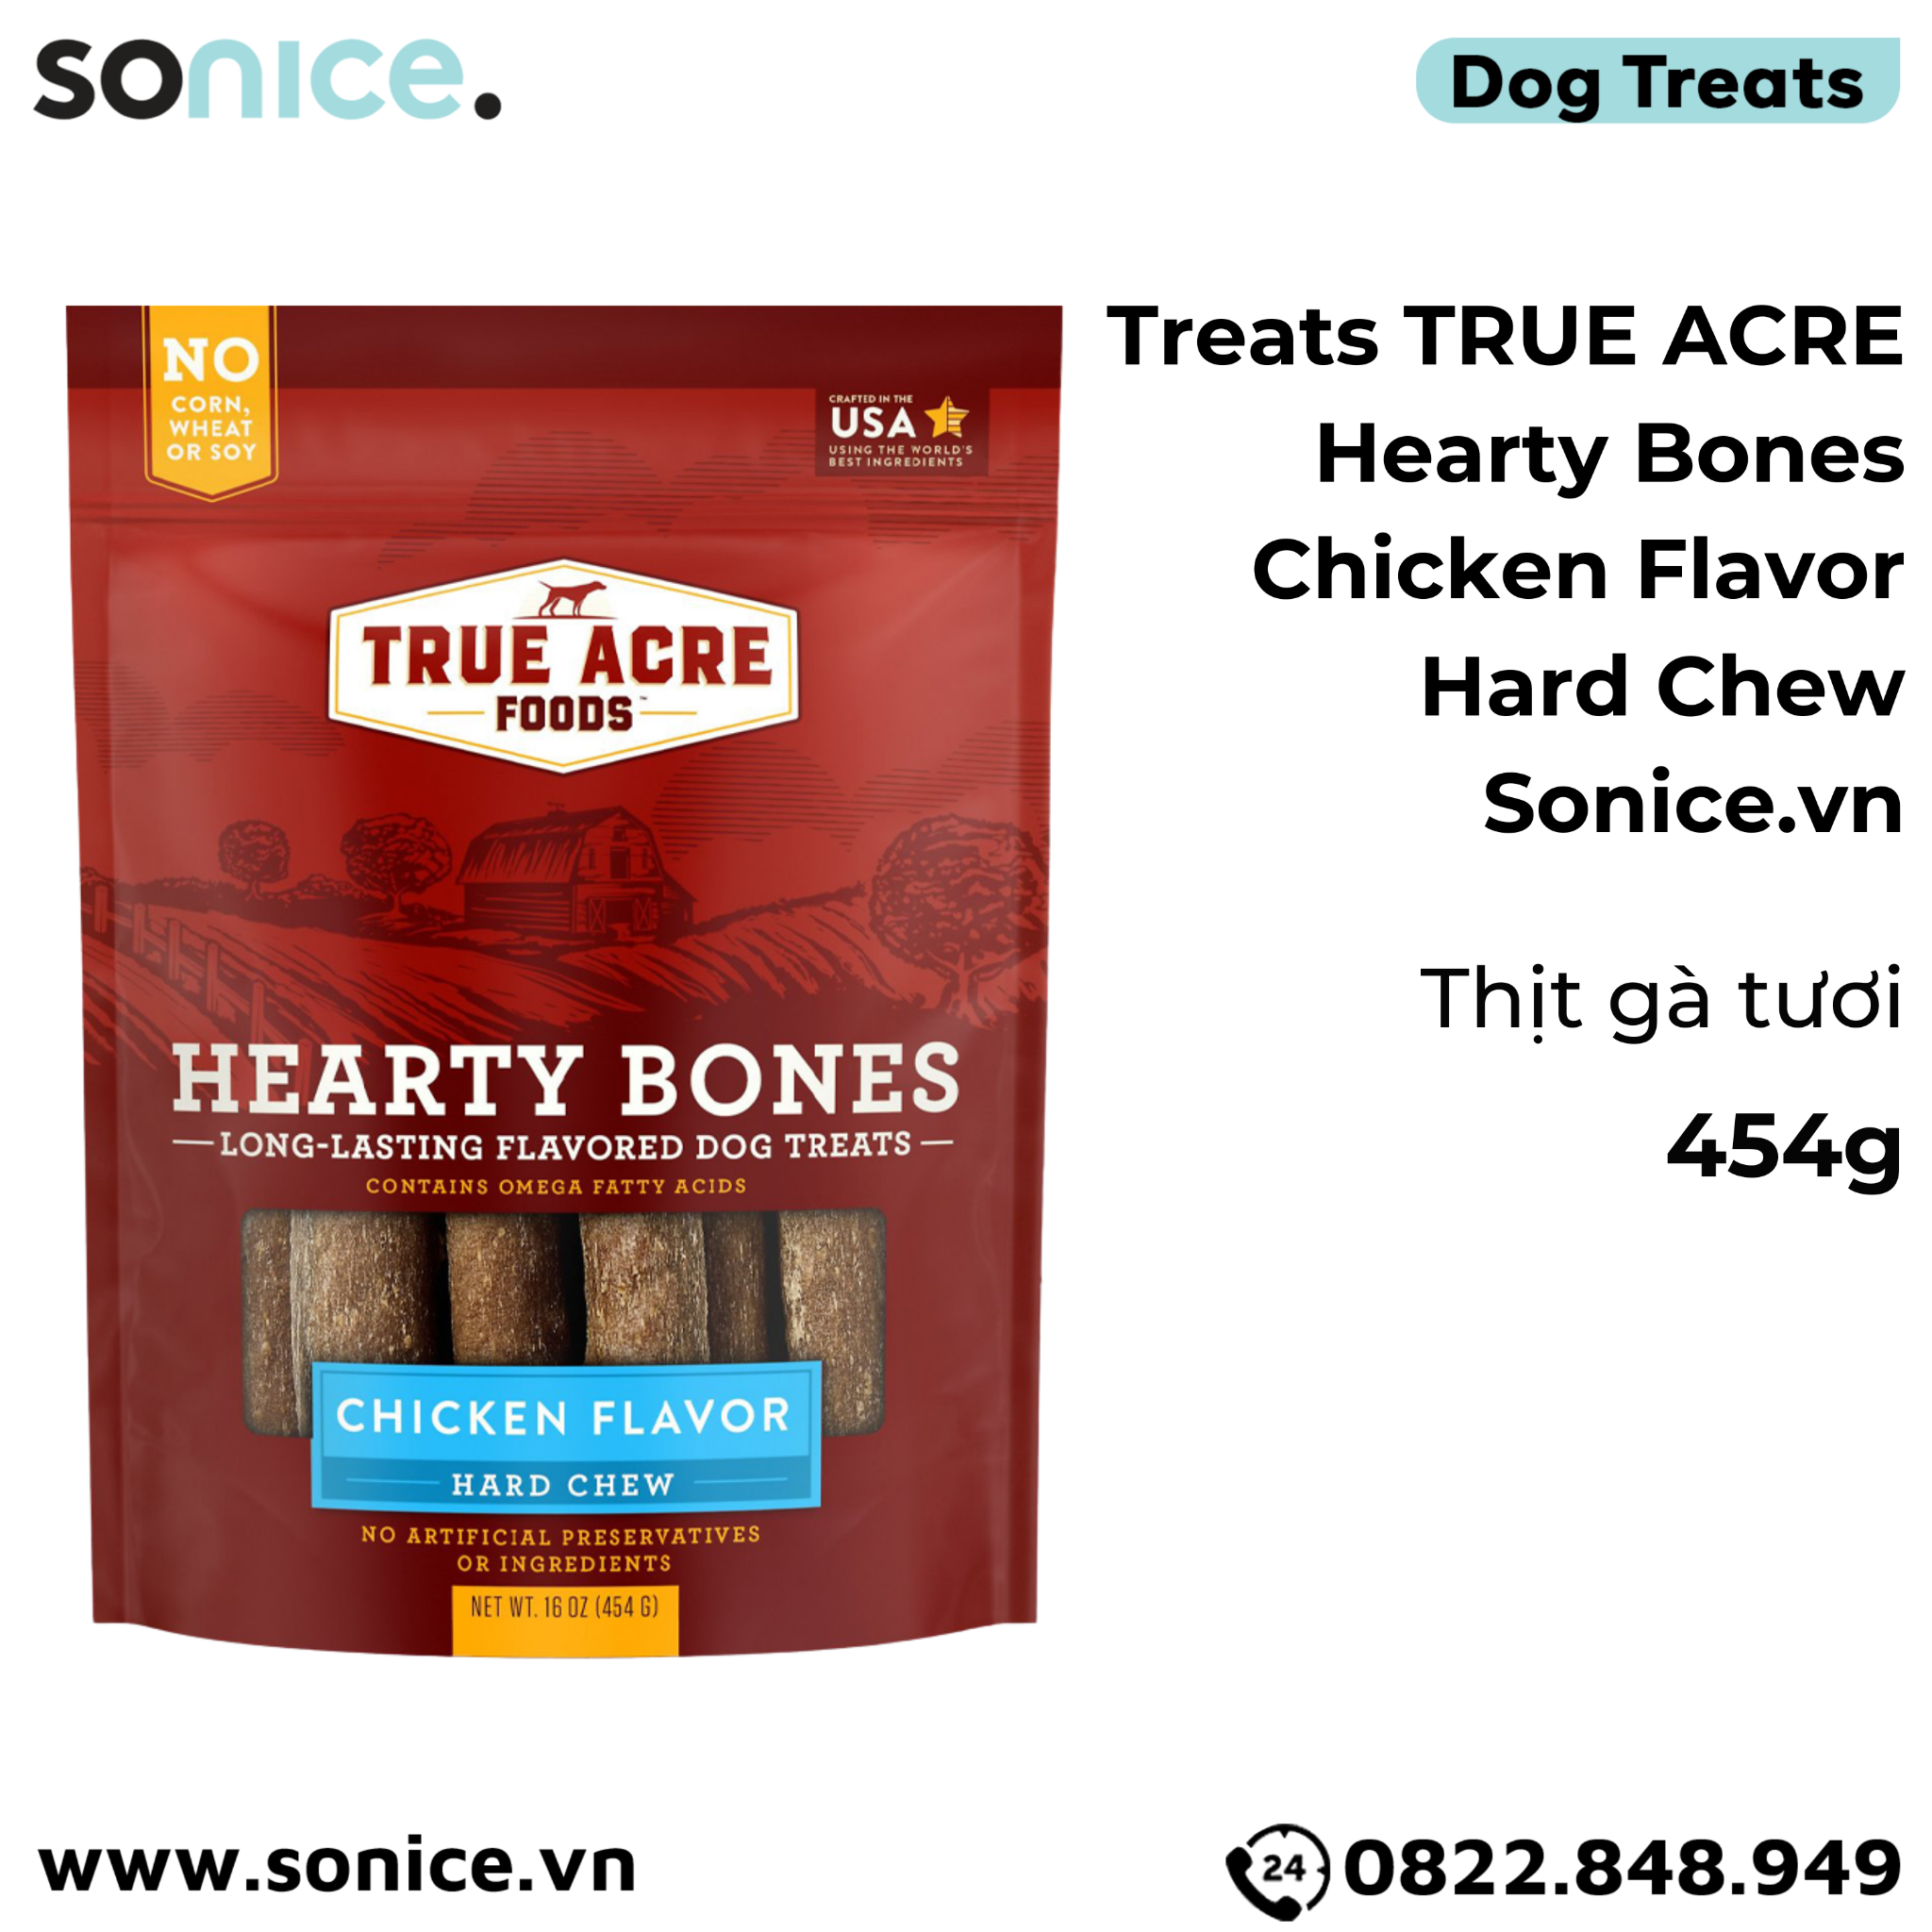  Treats TRUE ACRE Hearty Bones Chicken Flavor Hard Chew 454g - Thị gà, bổ sung Omega-3 SONICE. 